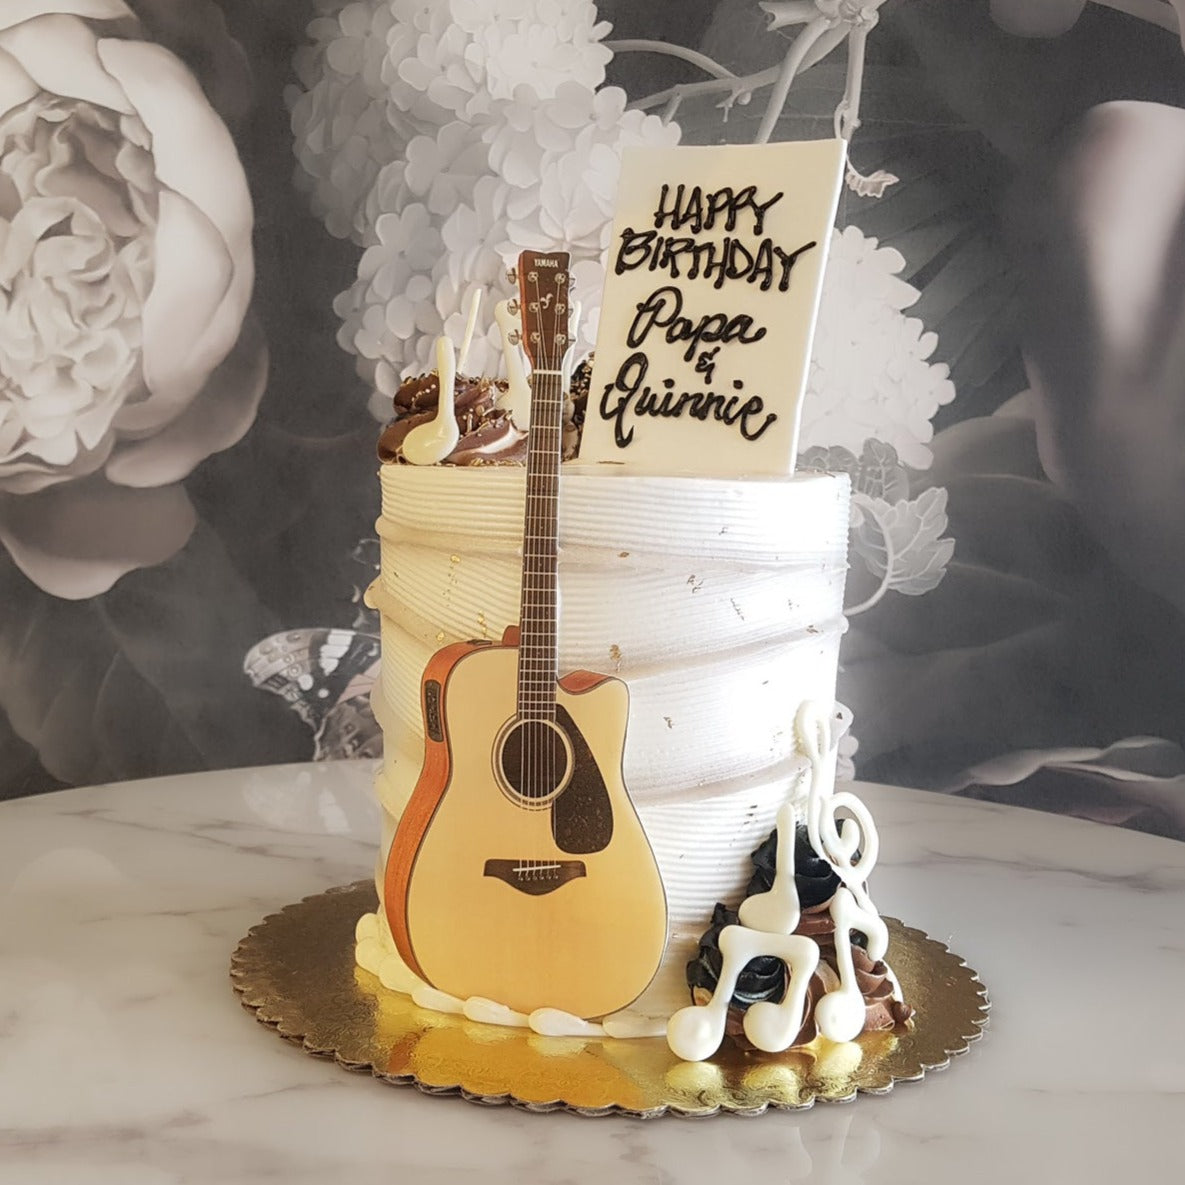 guitar cake music cake musician cake band cake artist cake rock and roll cake